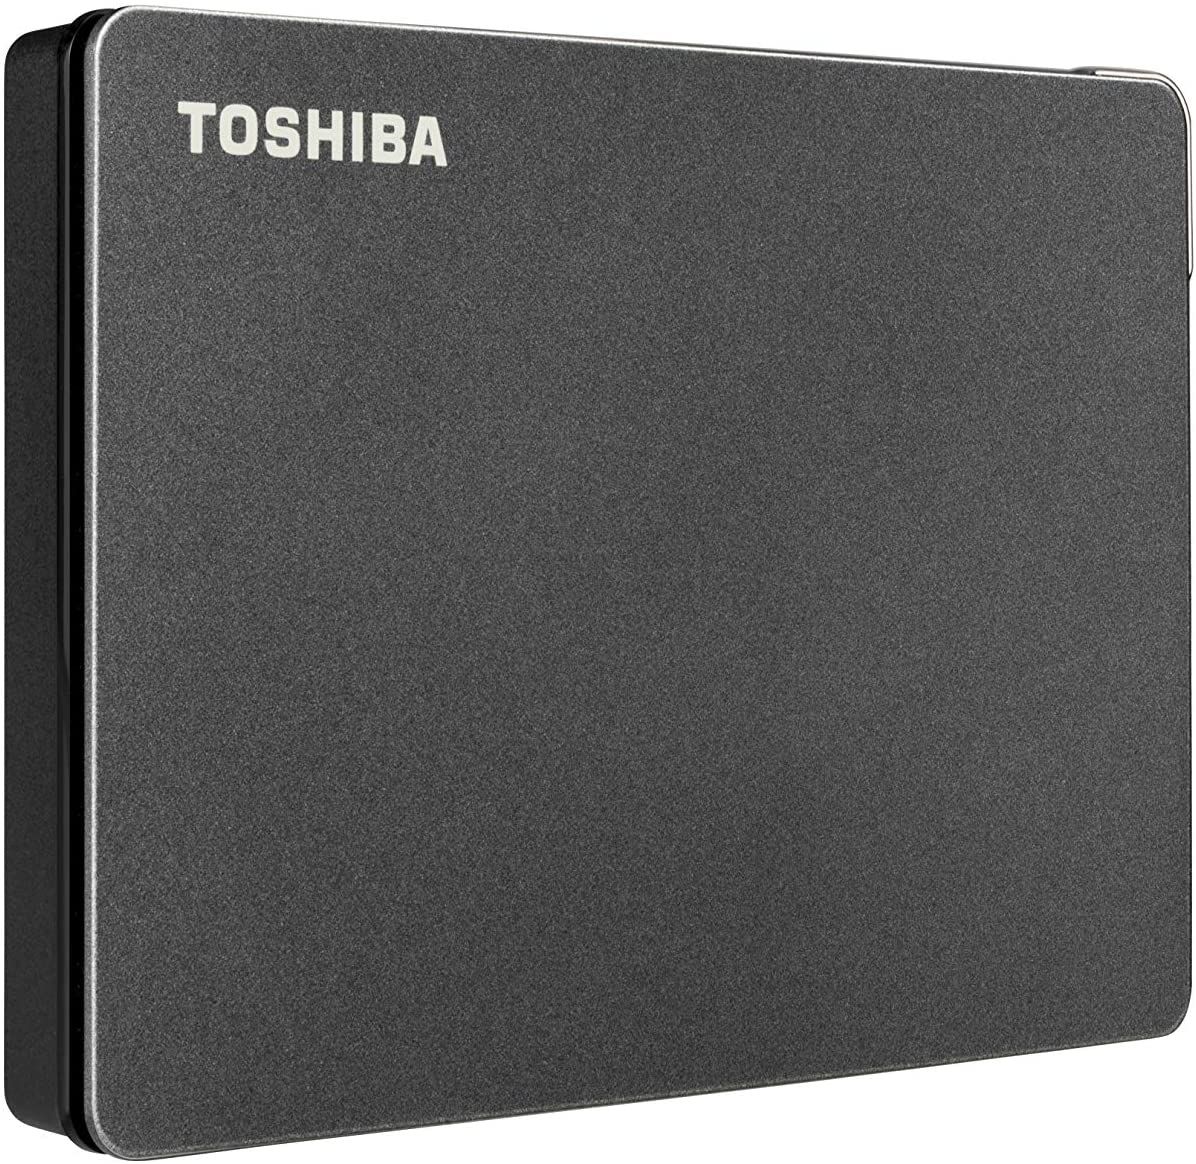 Memoria Externa 1tb Toshiba